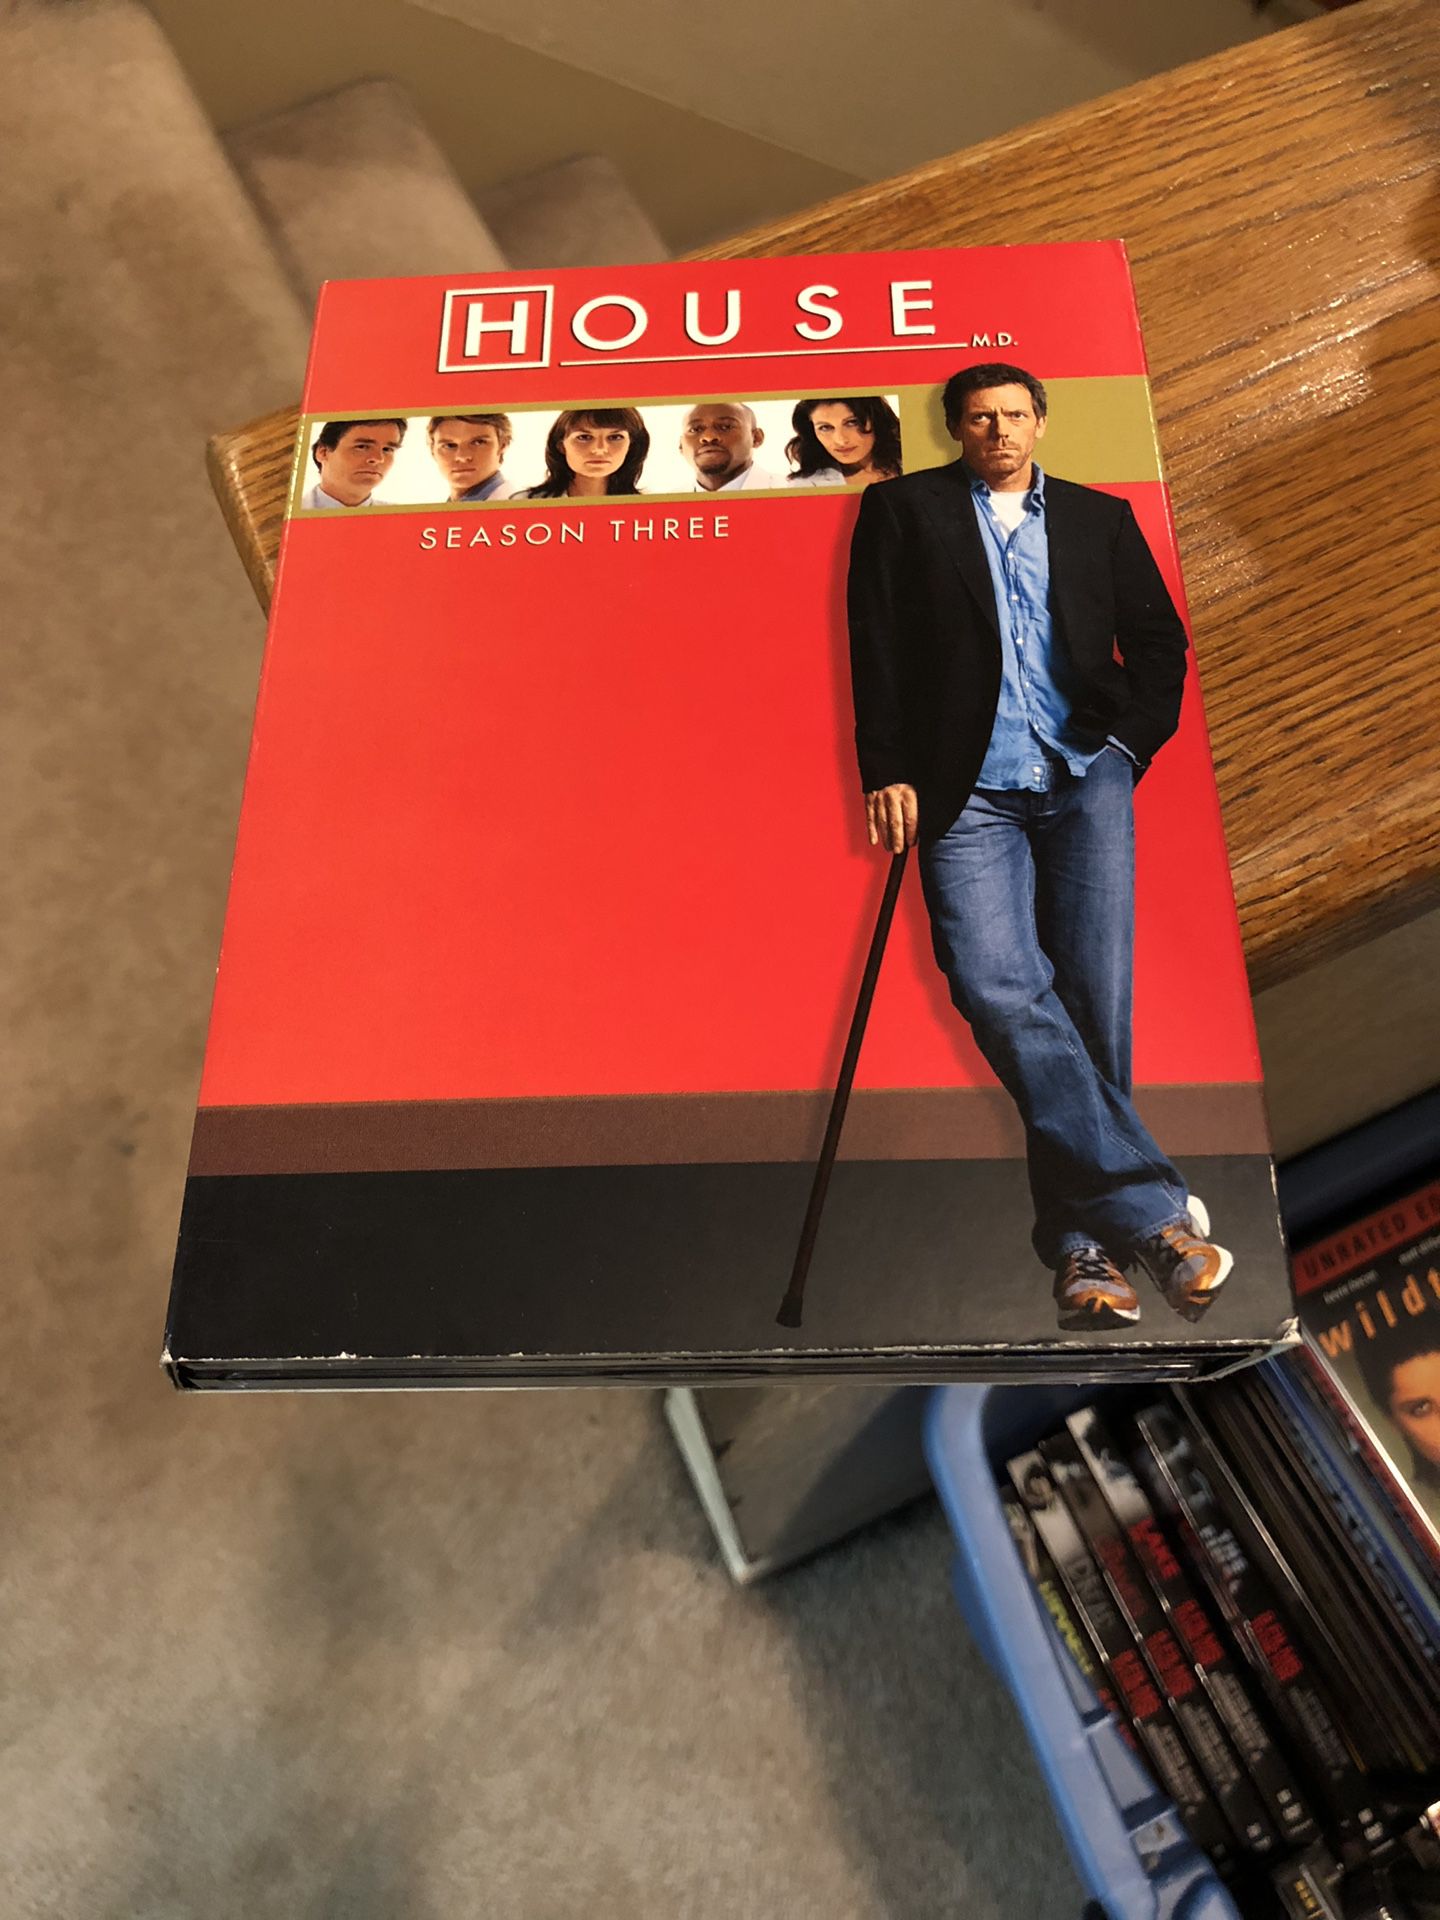 House M.D. Season 3 DVD Box Set S3 Tv Series three 3